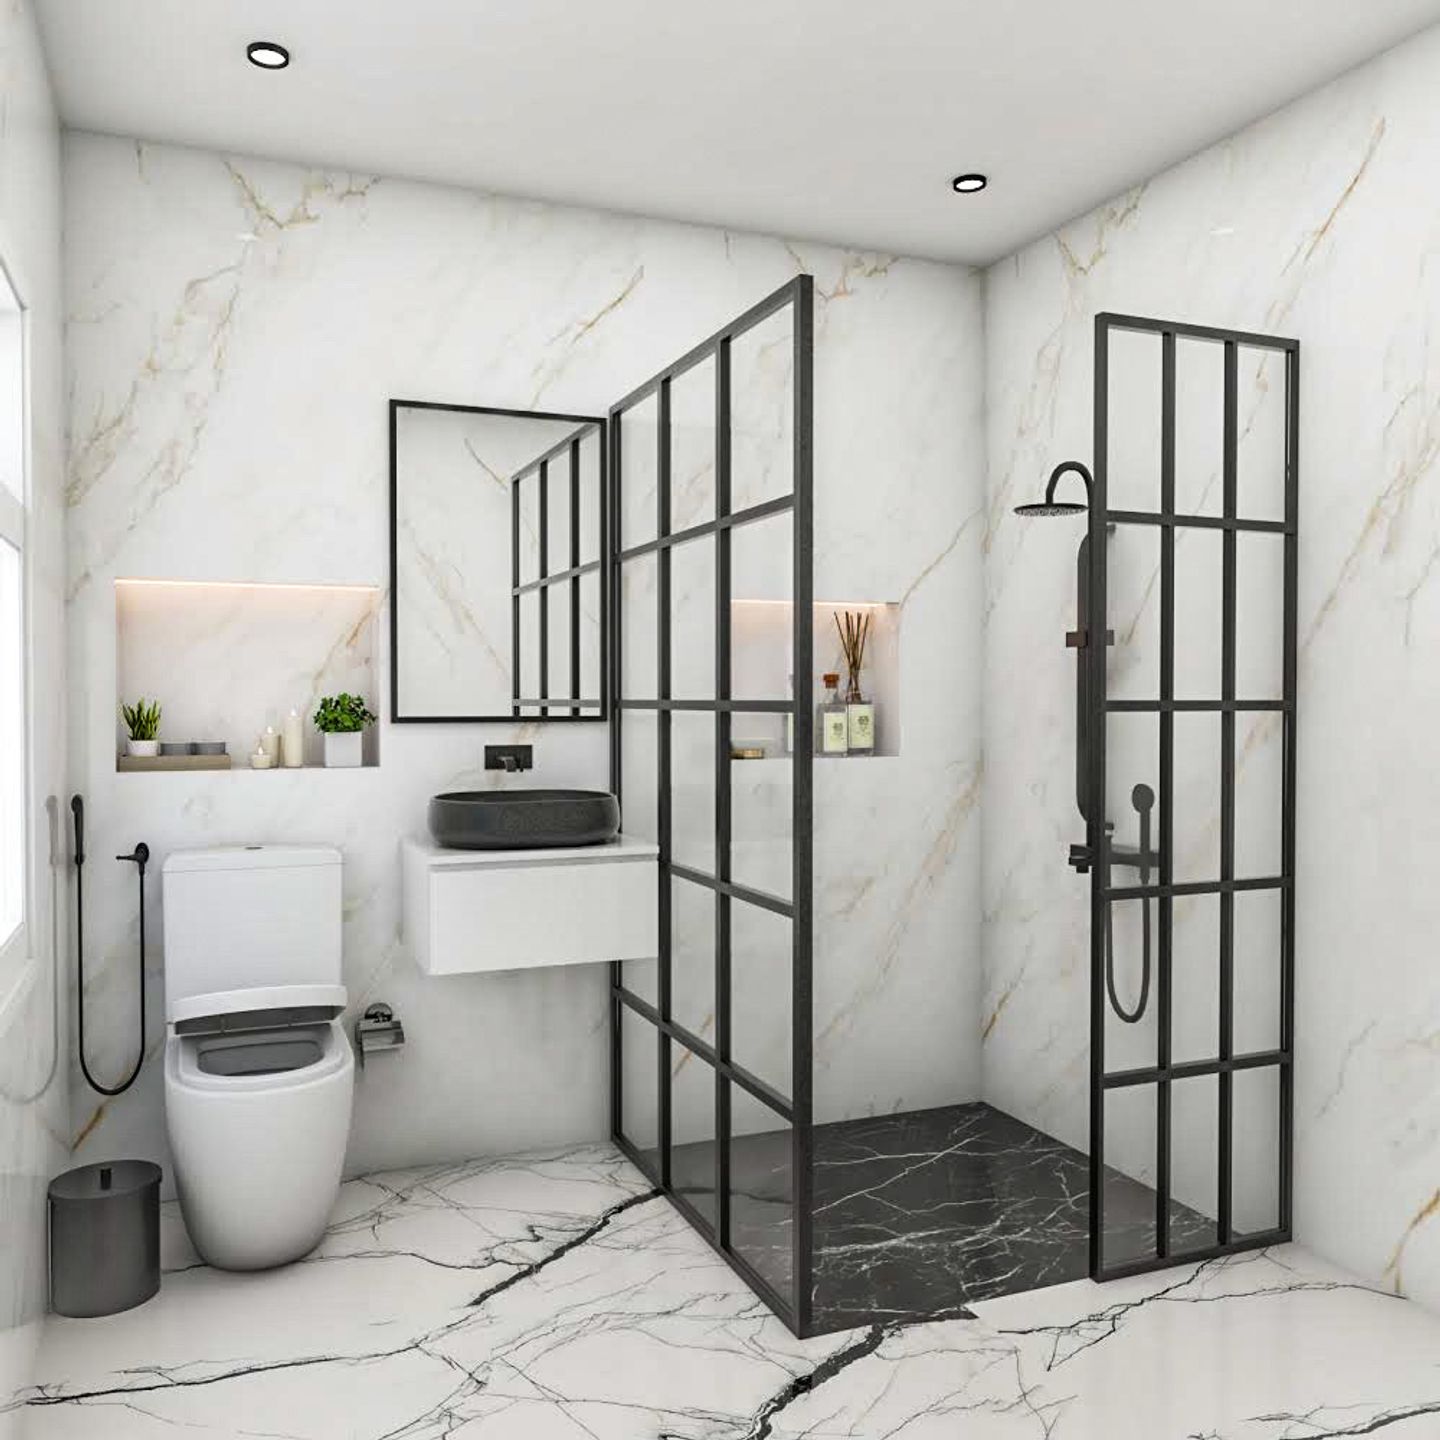 Bathroom Design With Black Grid Partition - Livspace